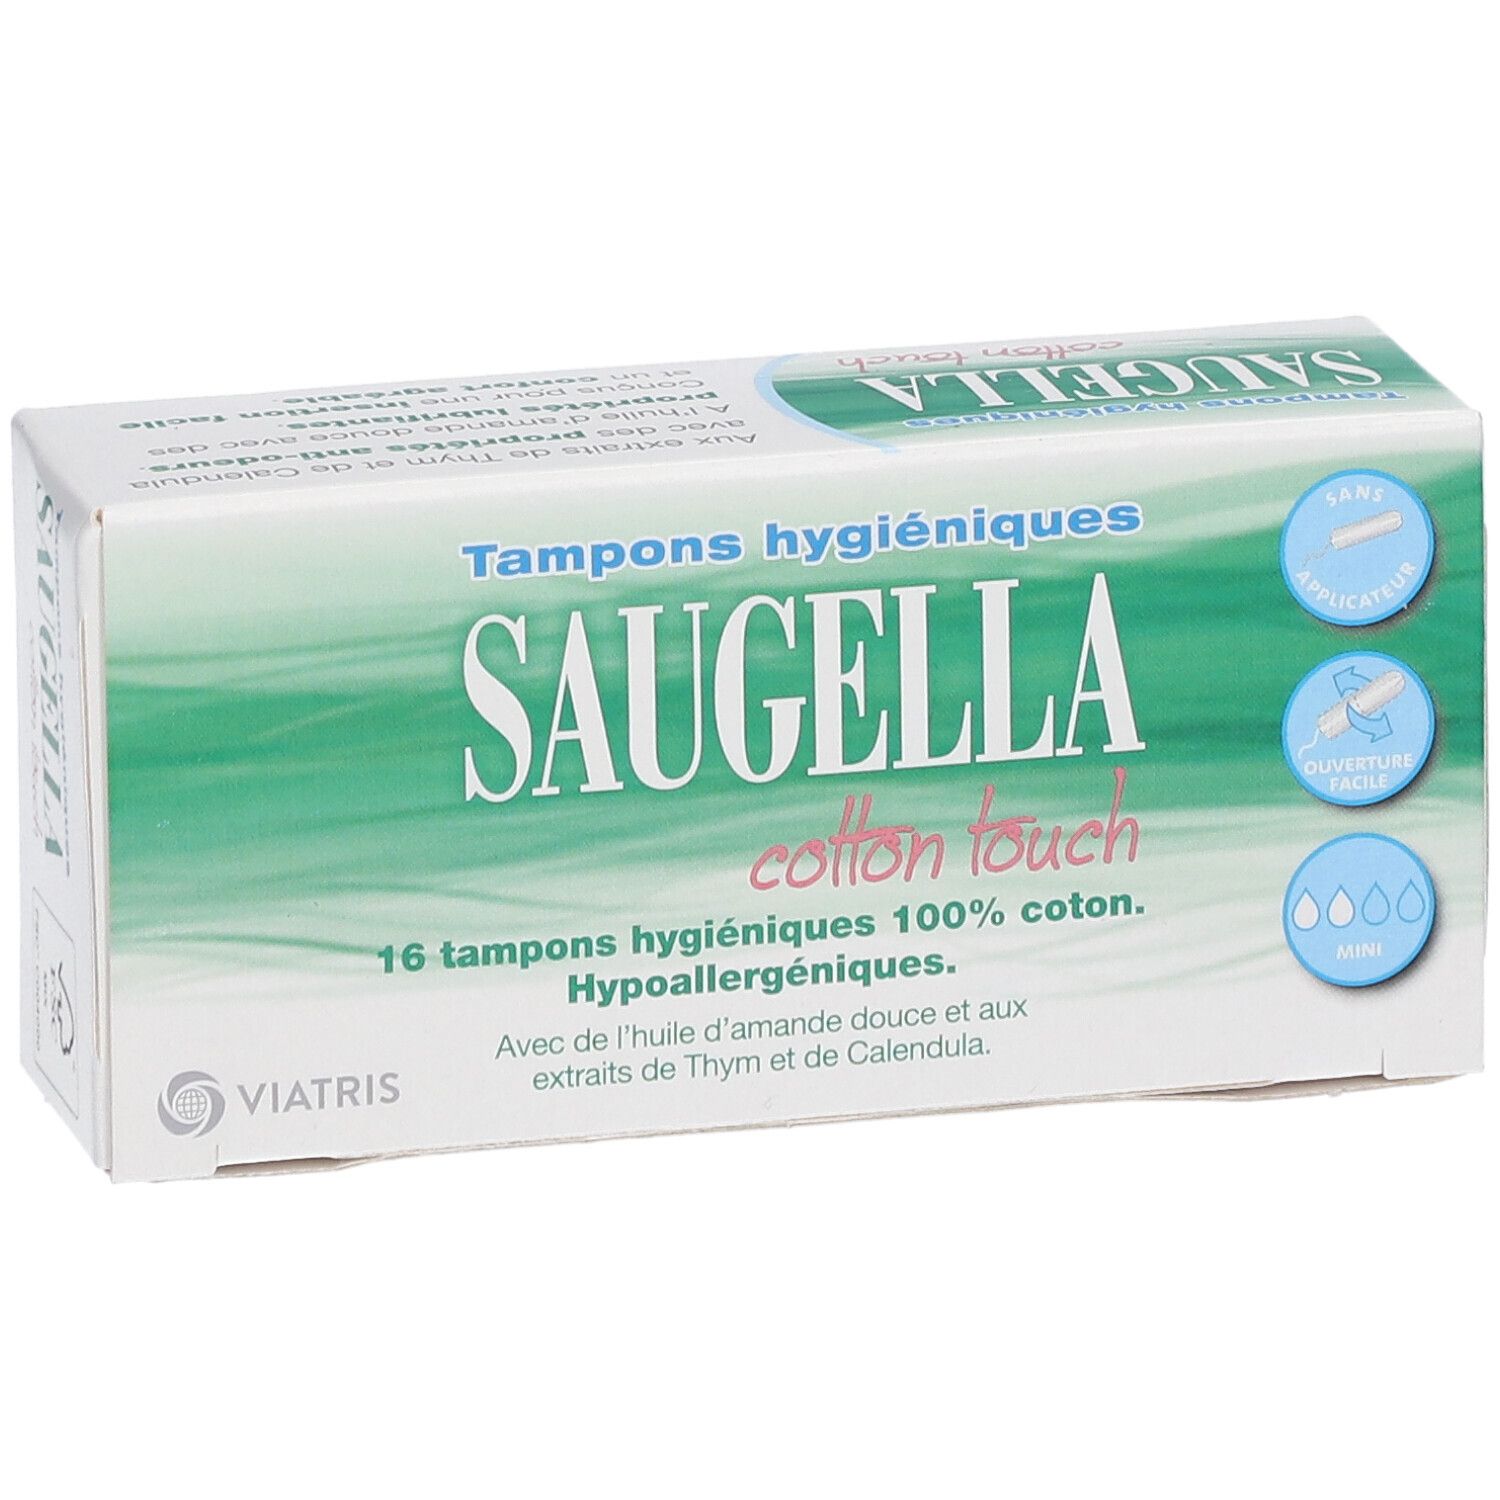 Saugella : Cotton touch tampon hygiénique mini Saugella, boite de 16 tampons